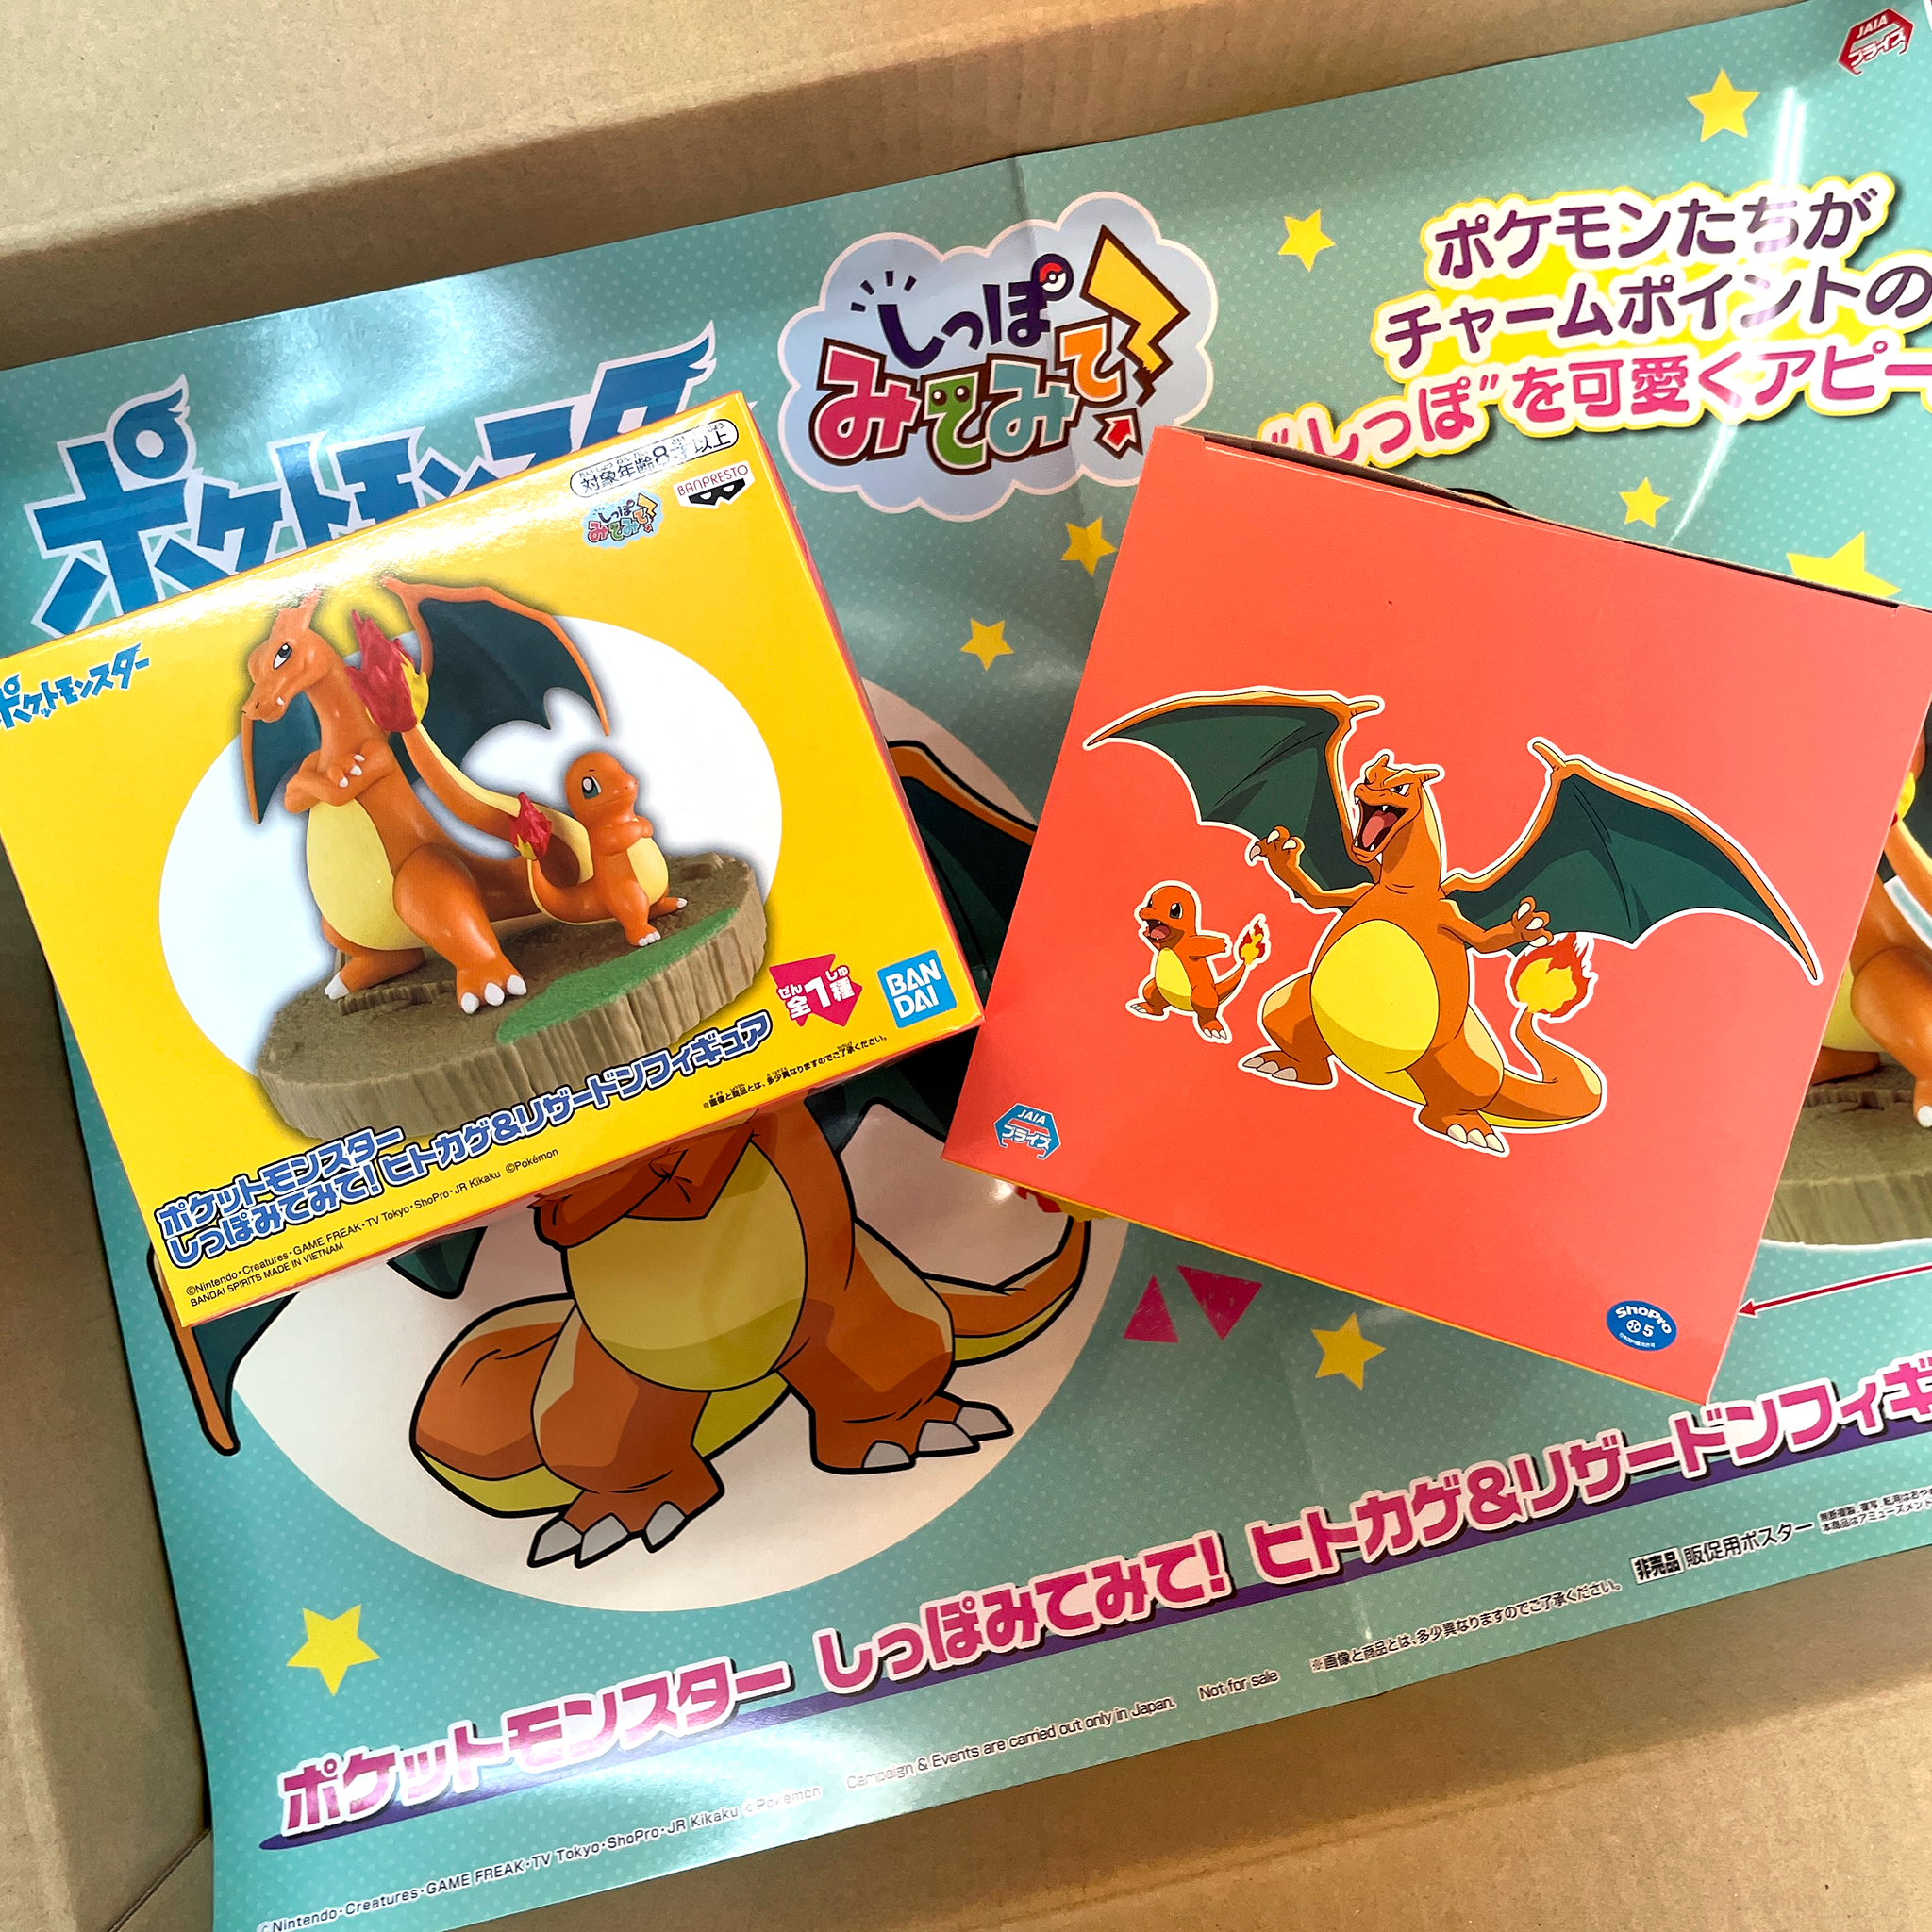 Mega Charizard X, Y Pokemon Monster Banpresto Collection Figure Toy Japan.